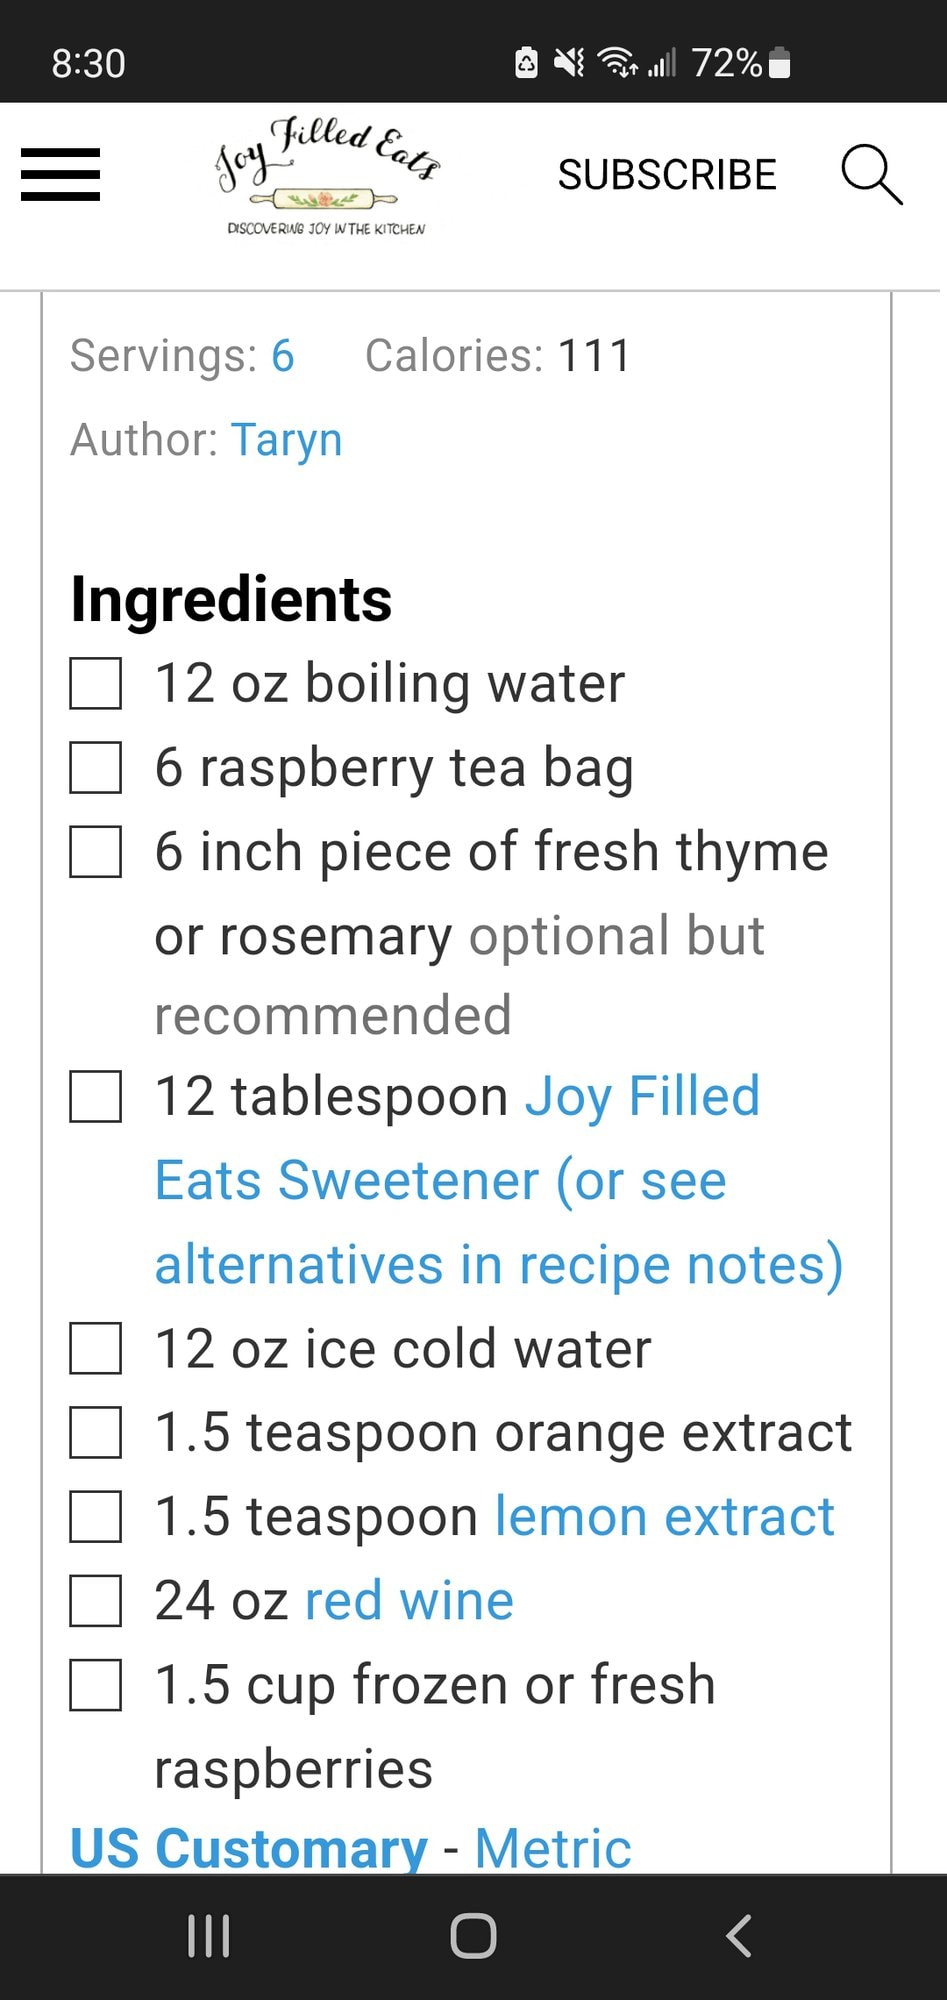 ingredients x 6